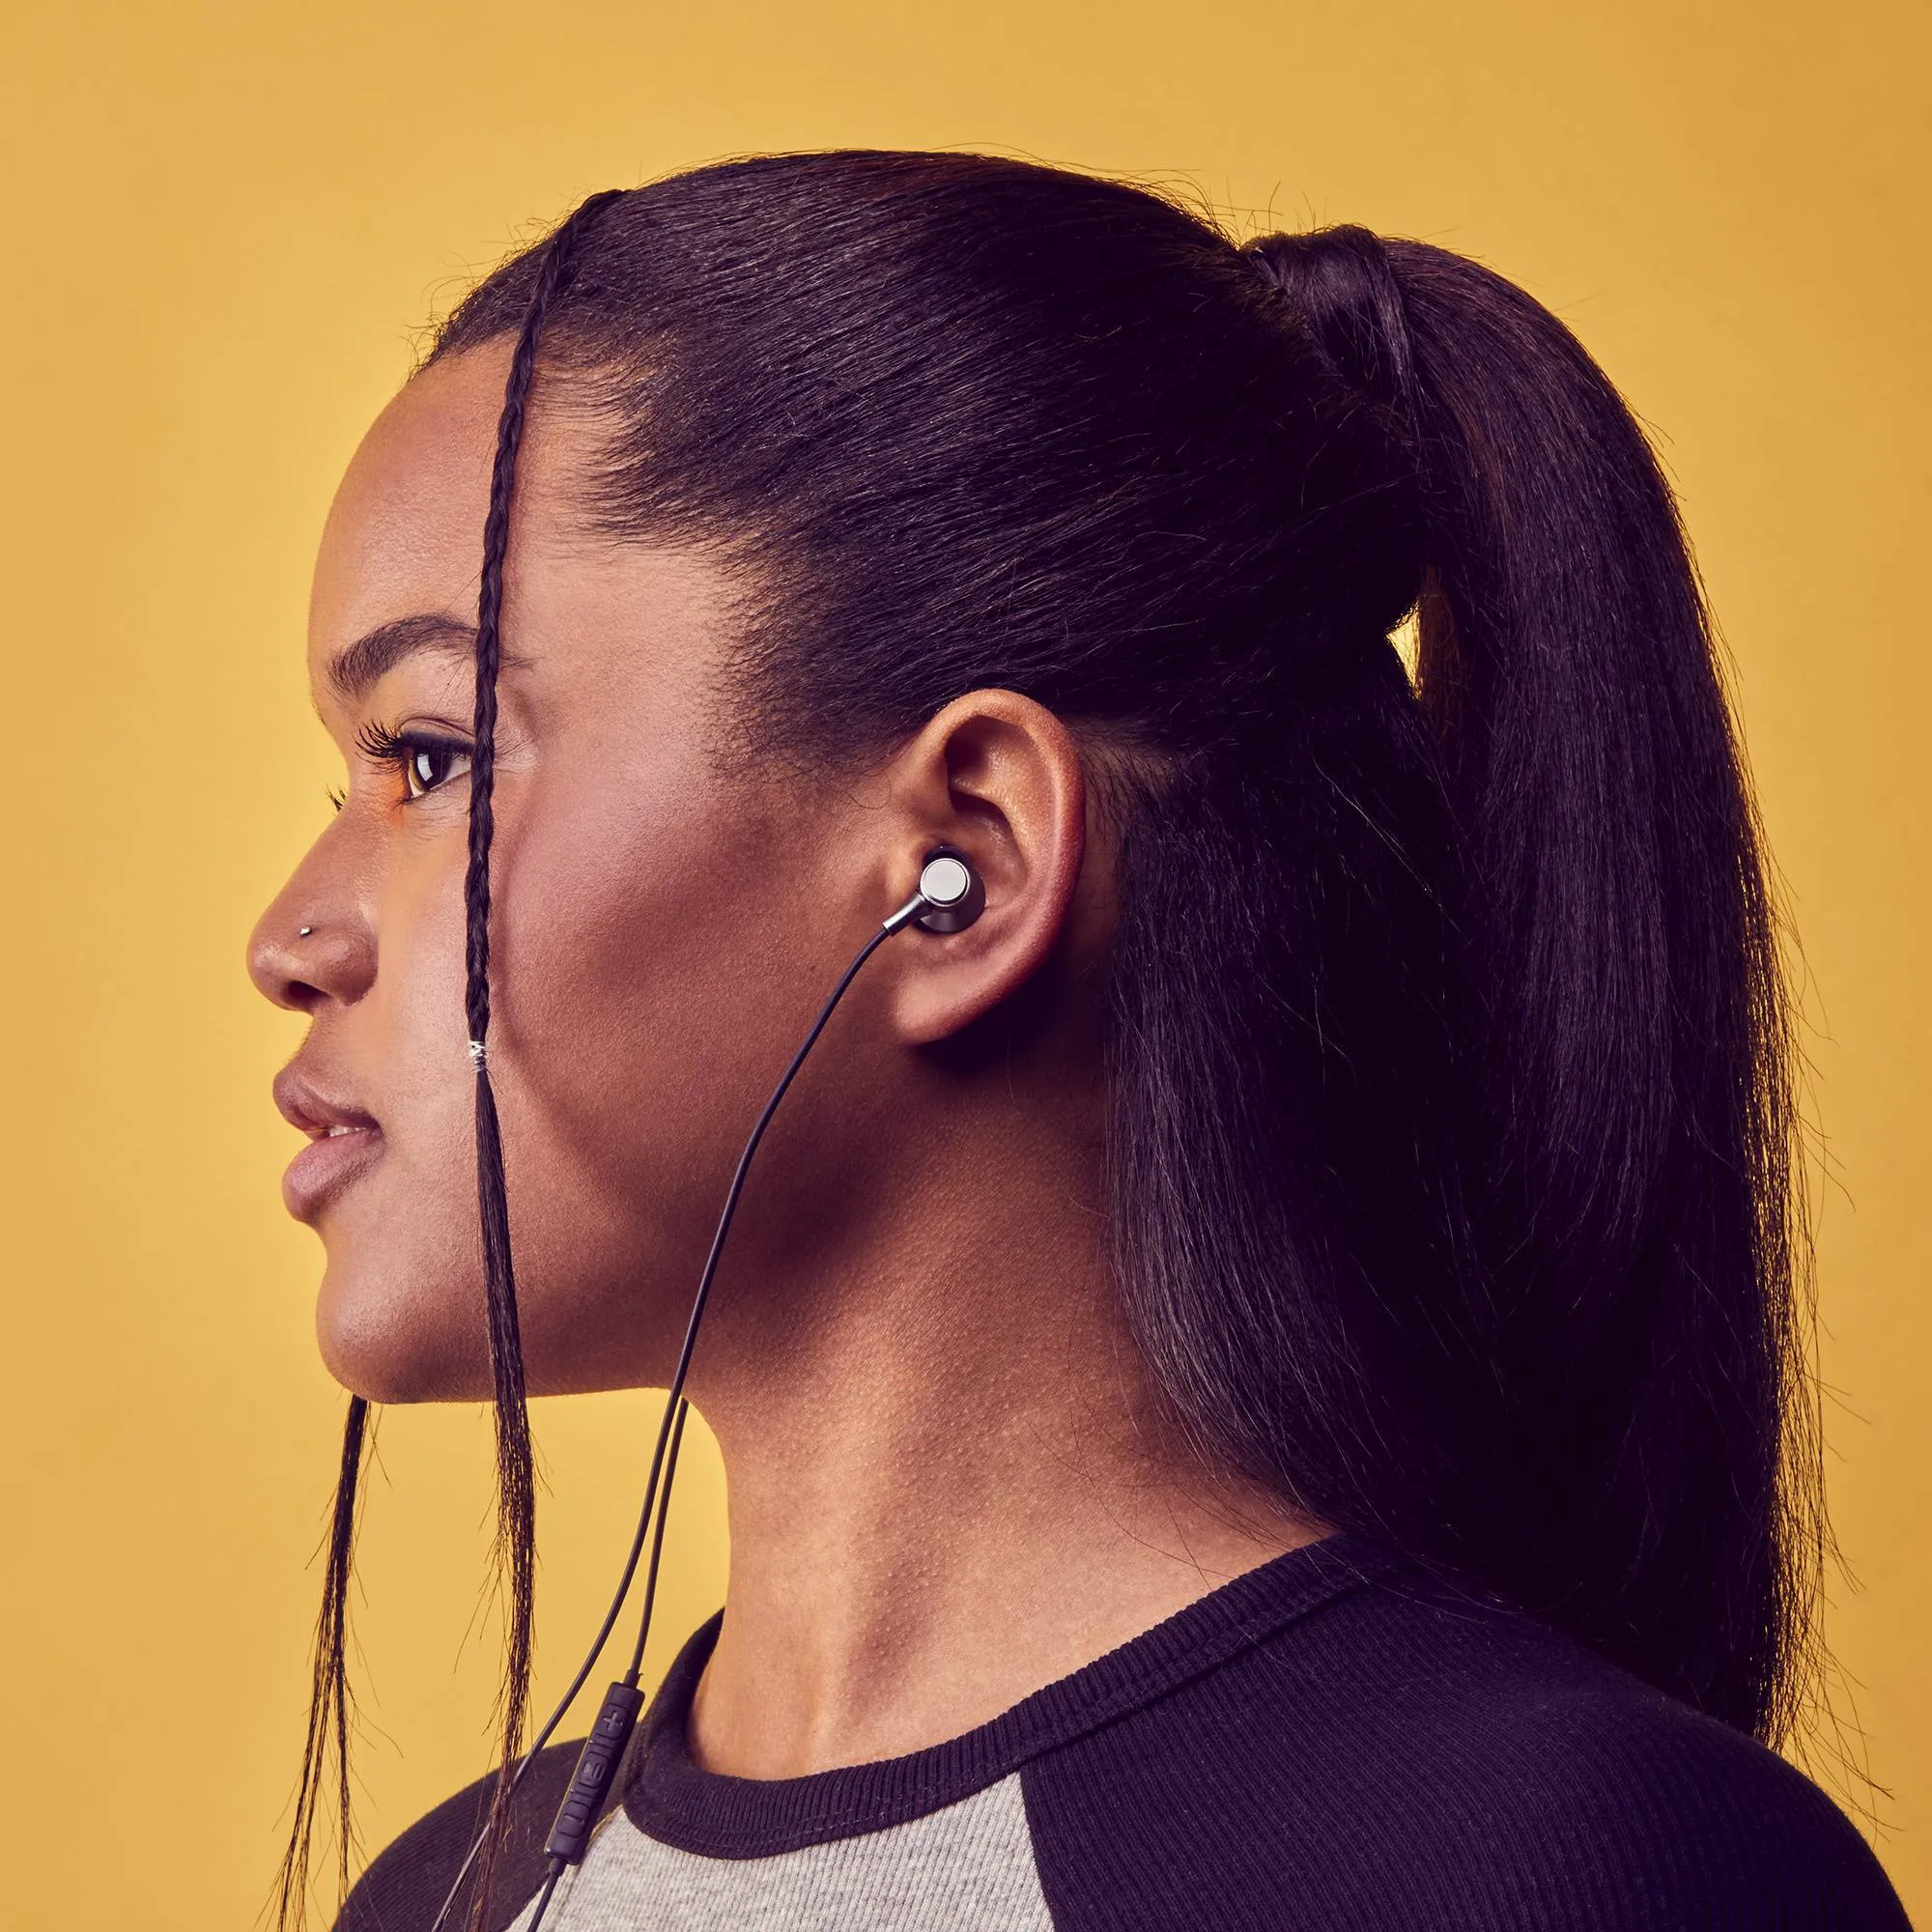 Metallized Type C - Wired earphones